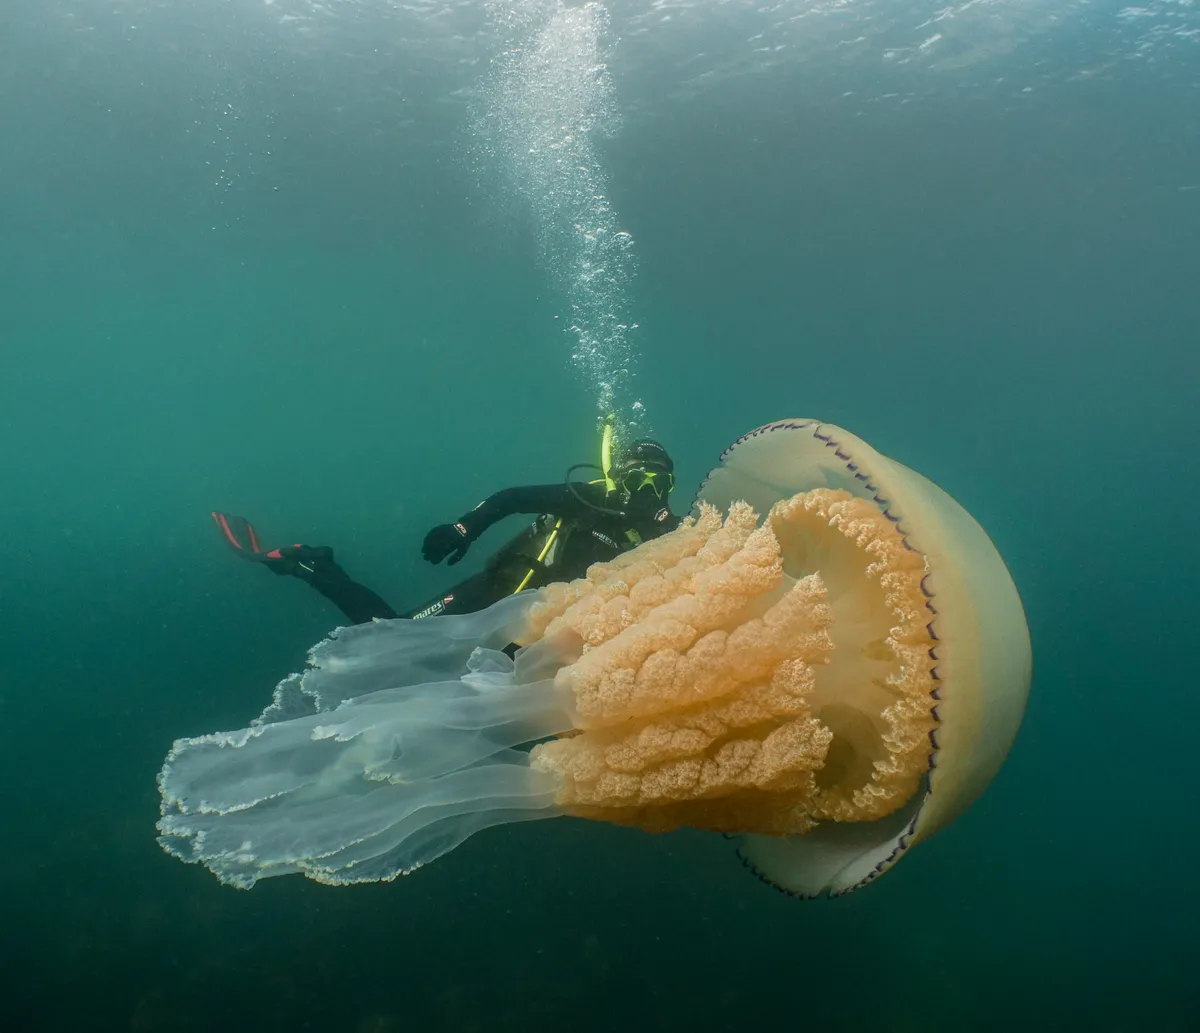 Lizzie Daly swimming next to the 1.6m barrel jellyfish. © Dan Abbott